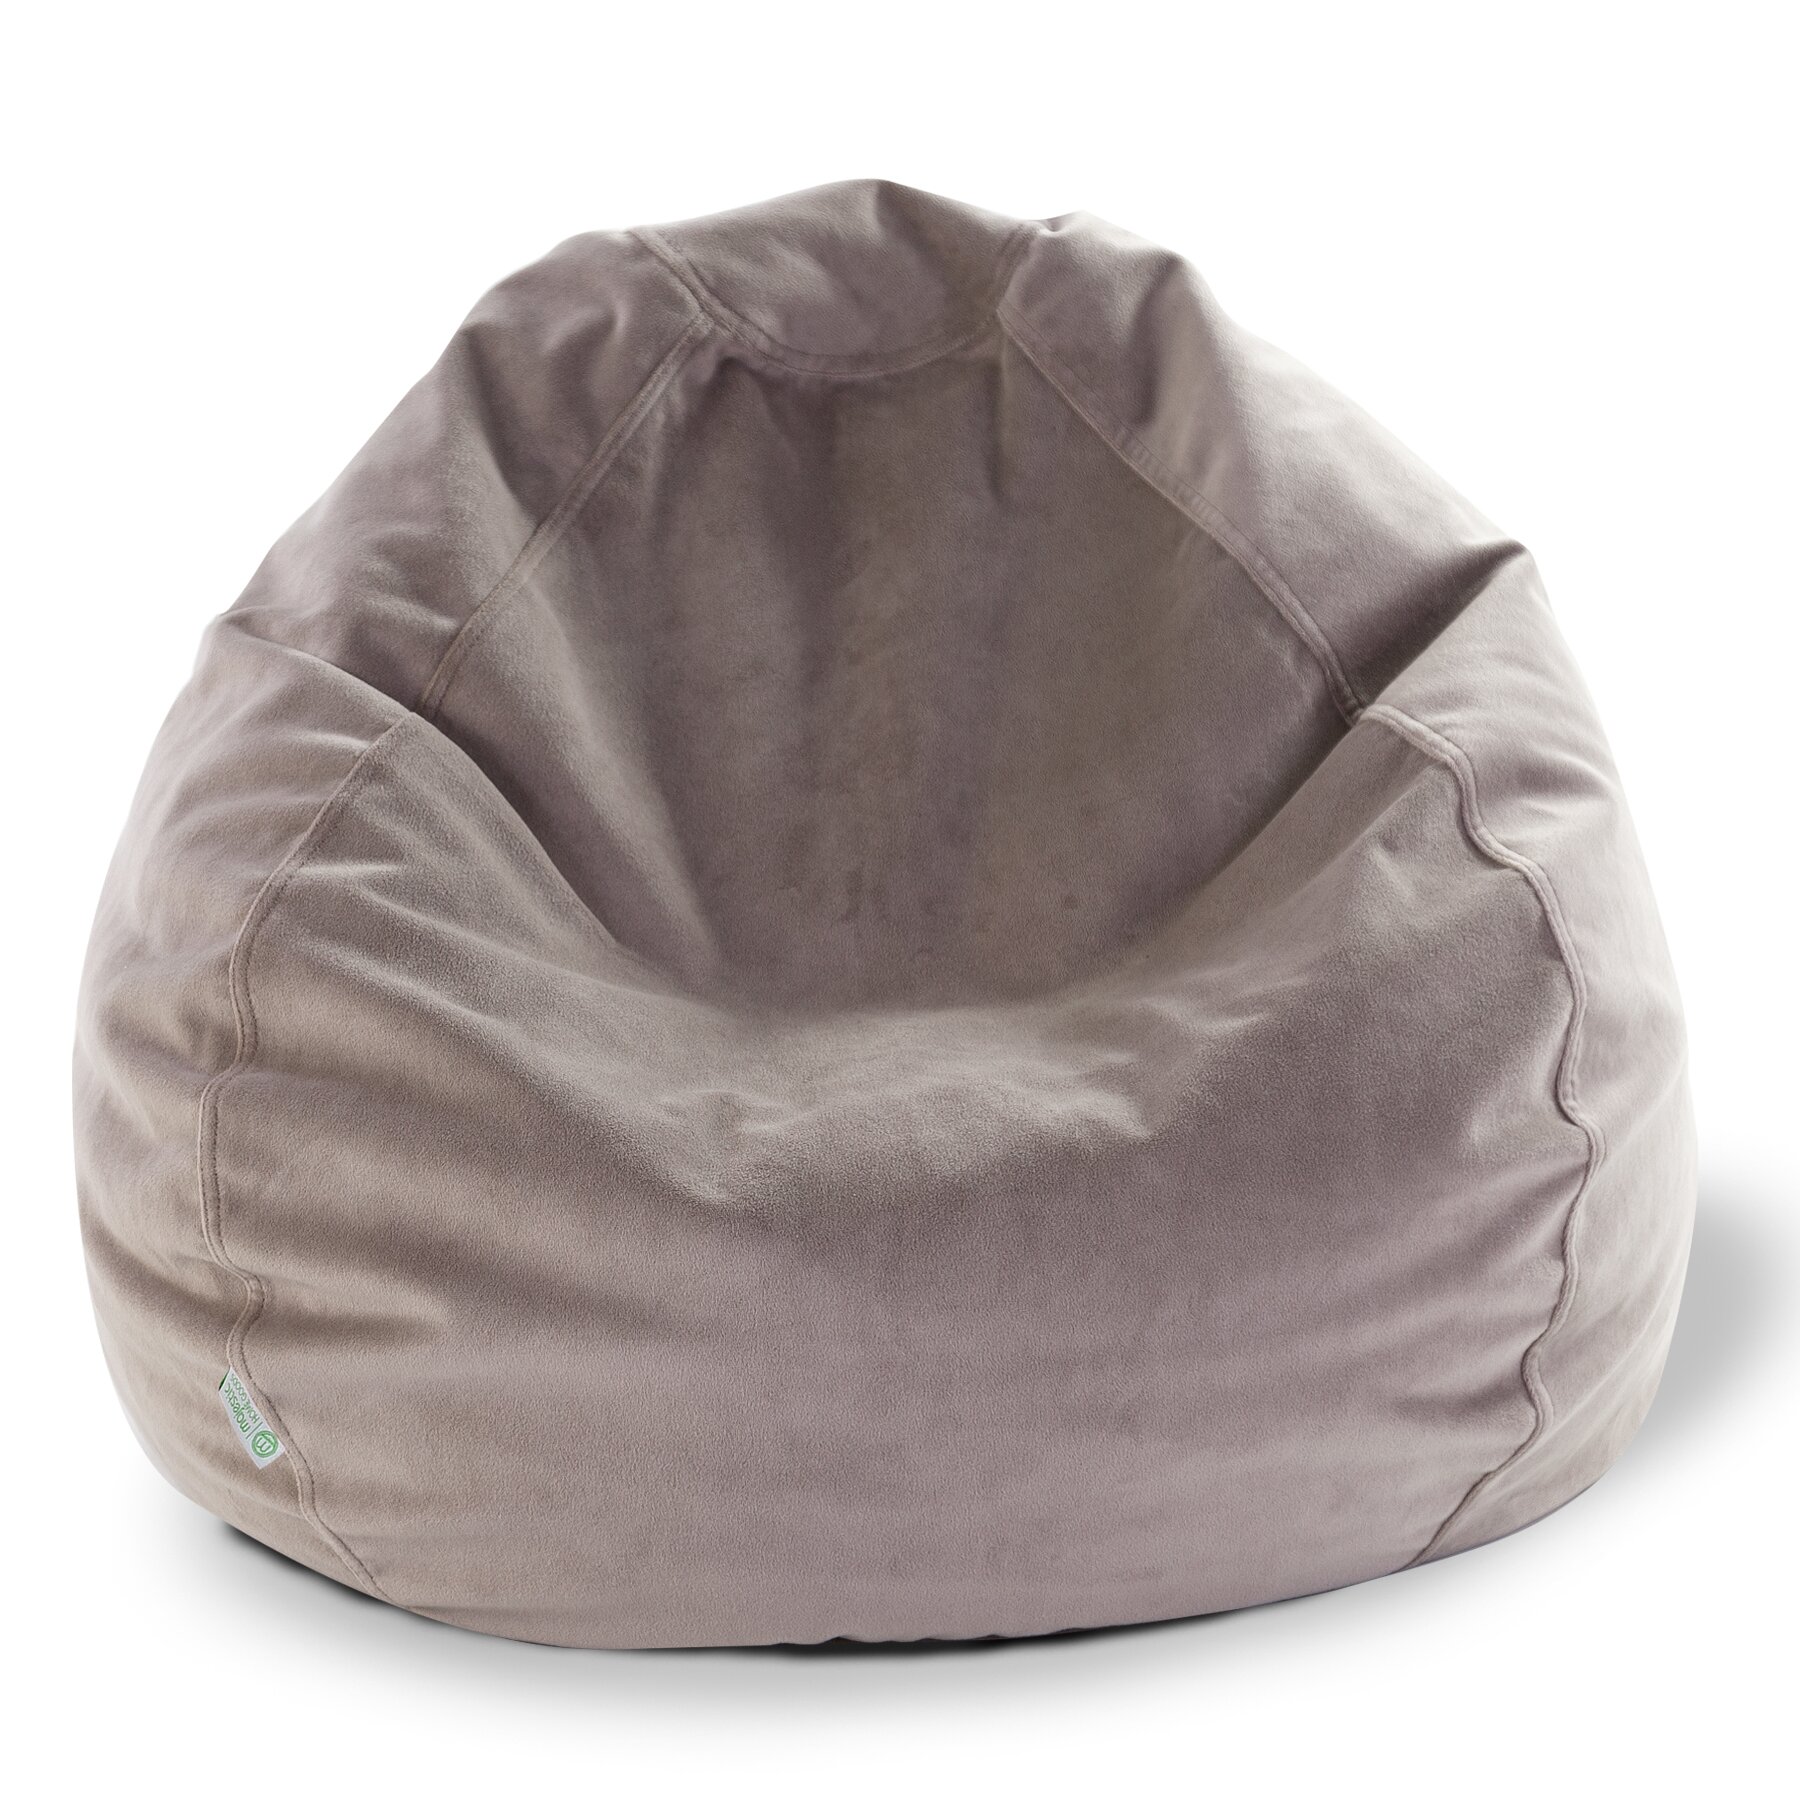 Majestic Home Goods Bean Bag Chair & Reviews | Wayfair